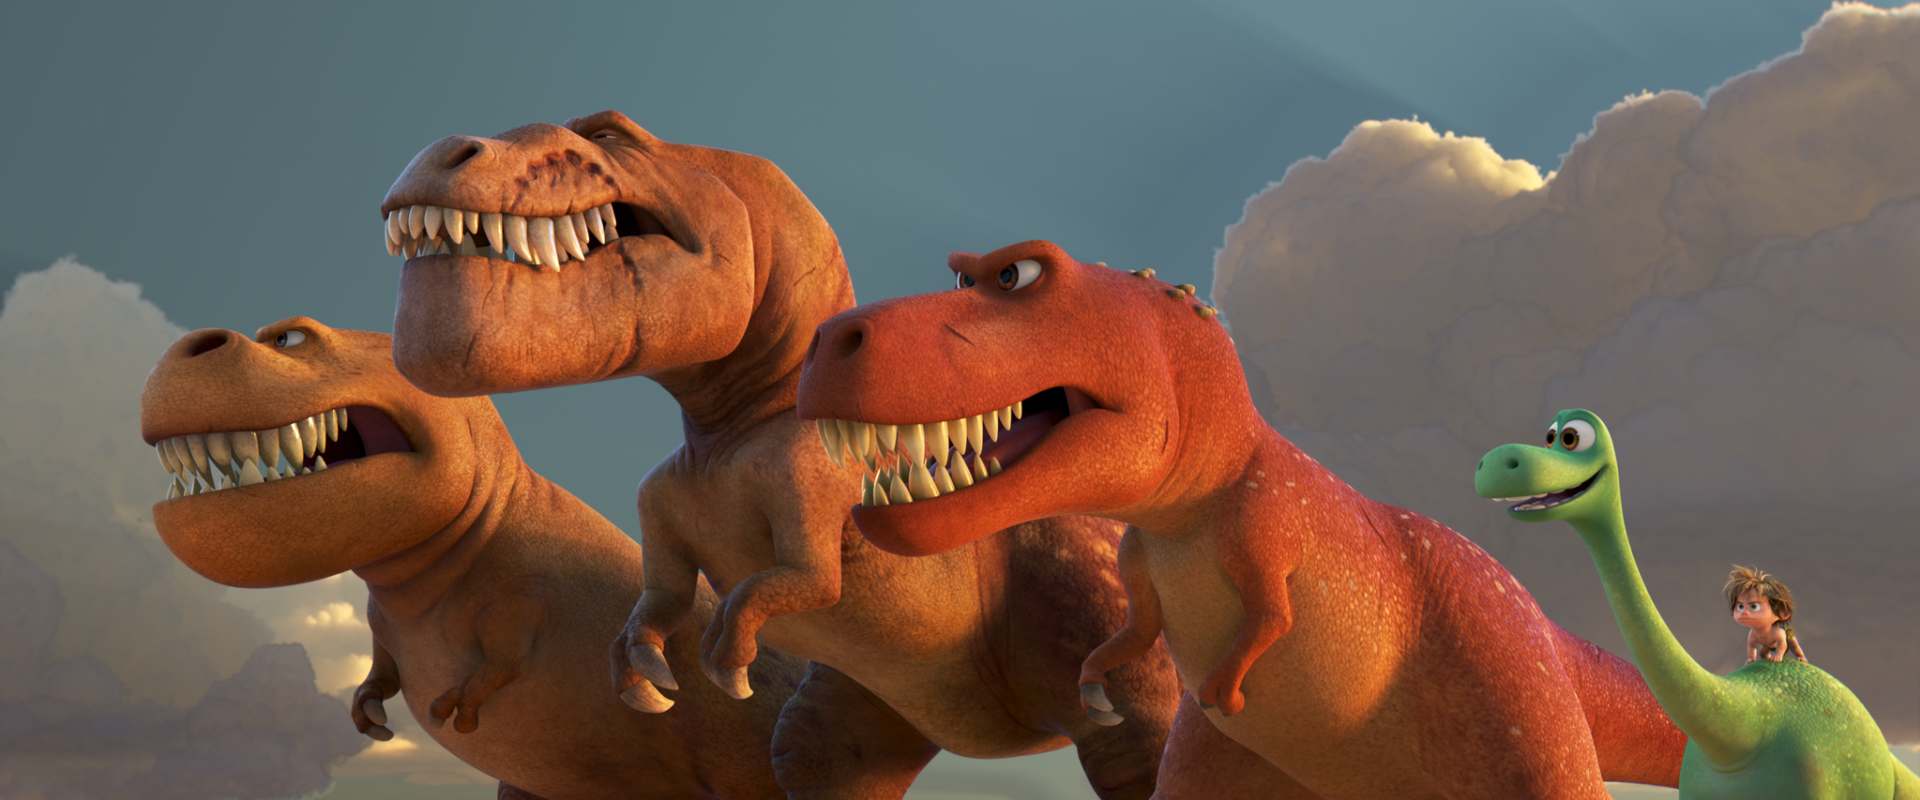 Watch The Good Dinosaur on Netflix Today! | NetflixMovies.com